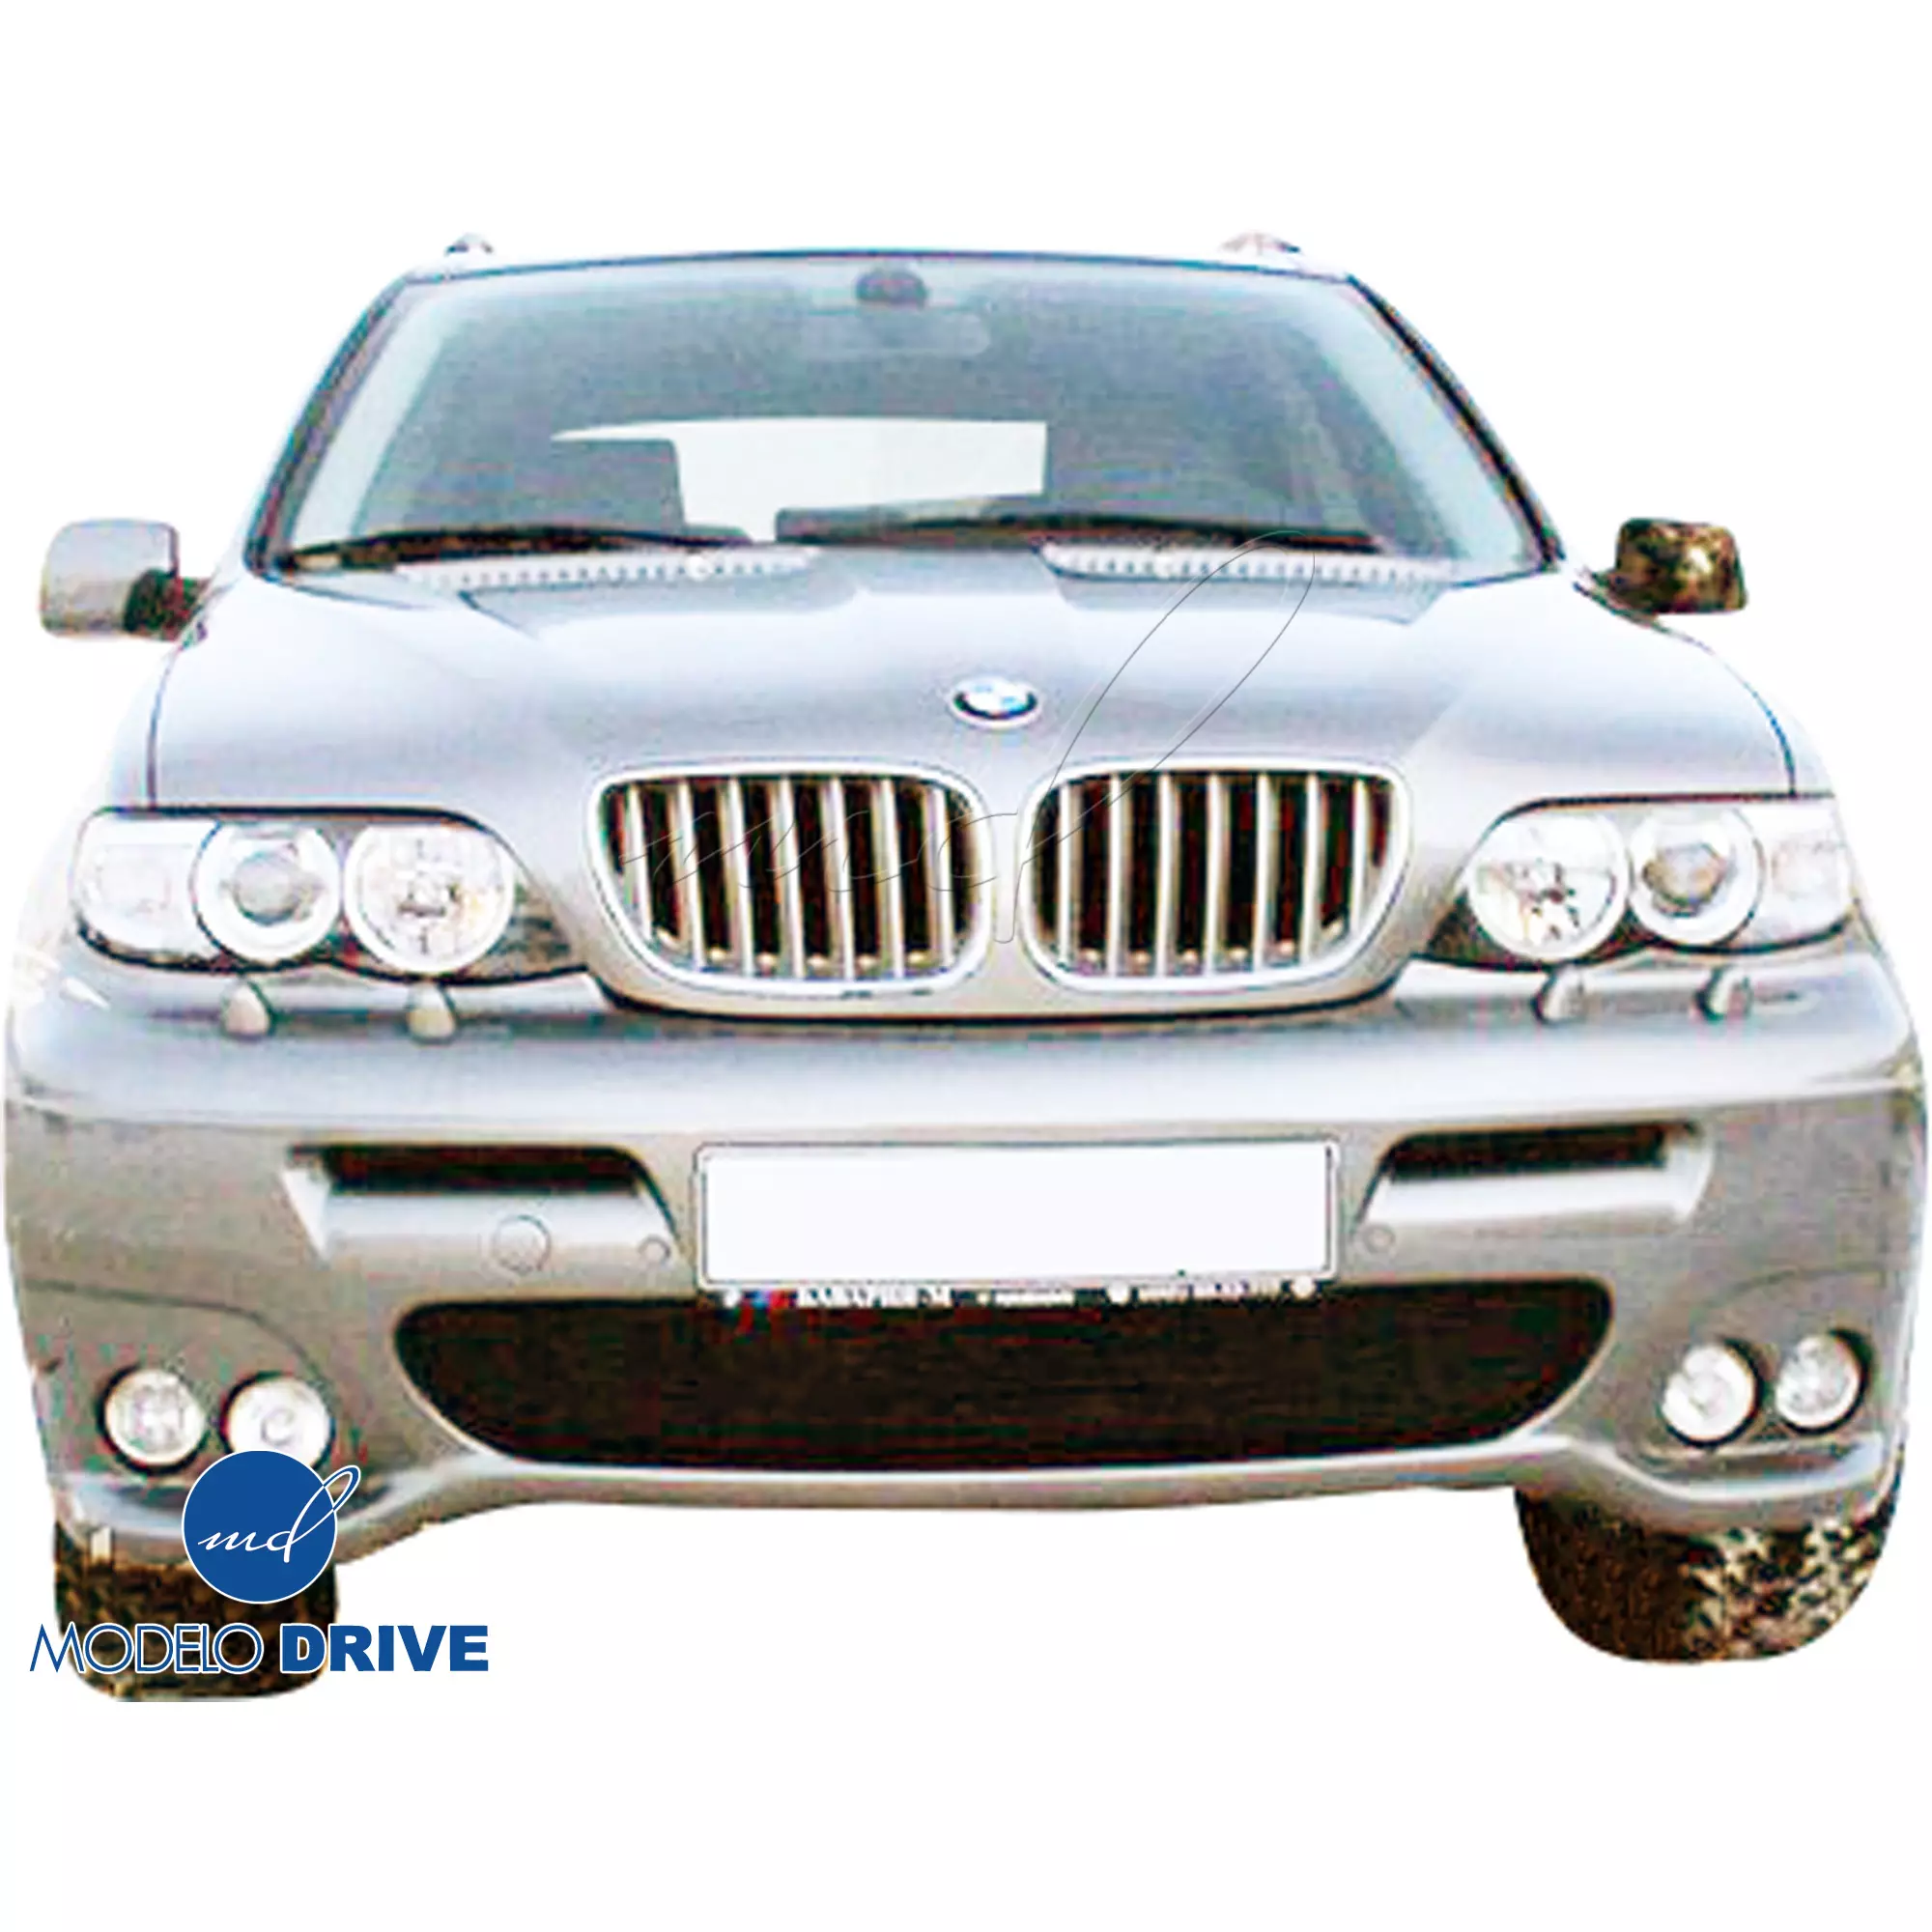 ModeloDrive FRP HAMA Body Kit 3pc > BMW X5 E53 2000-2006 > 5dr - Image 2